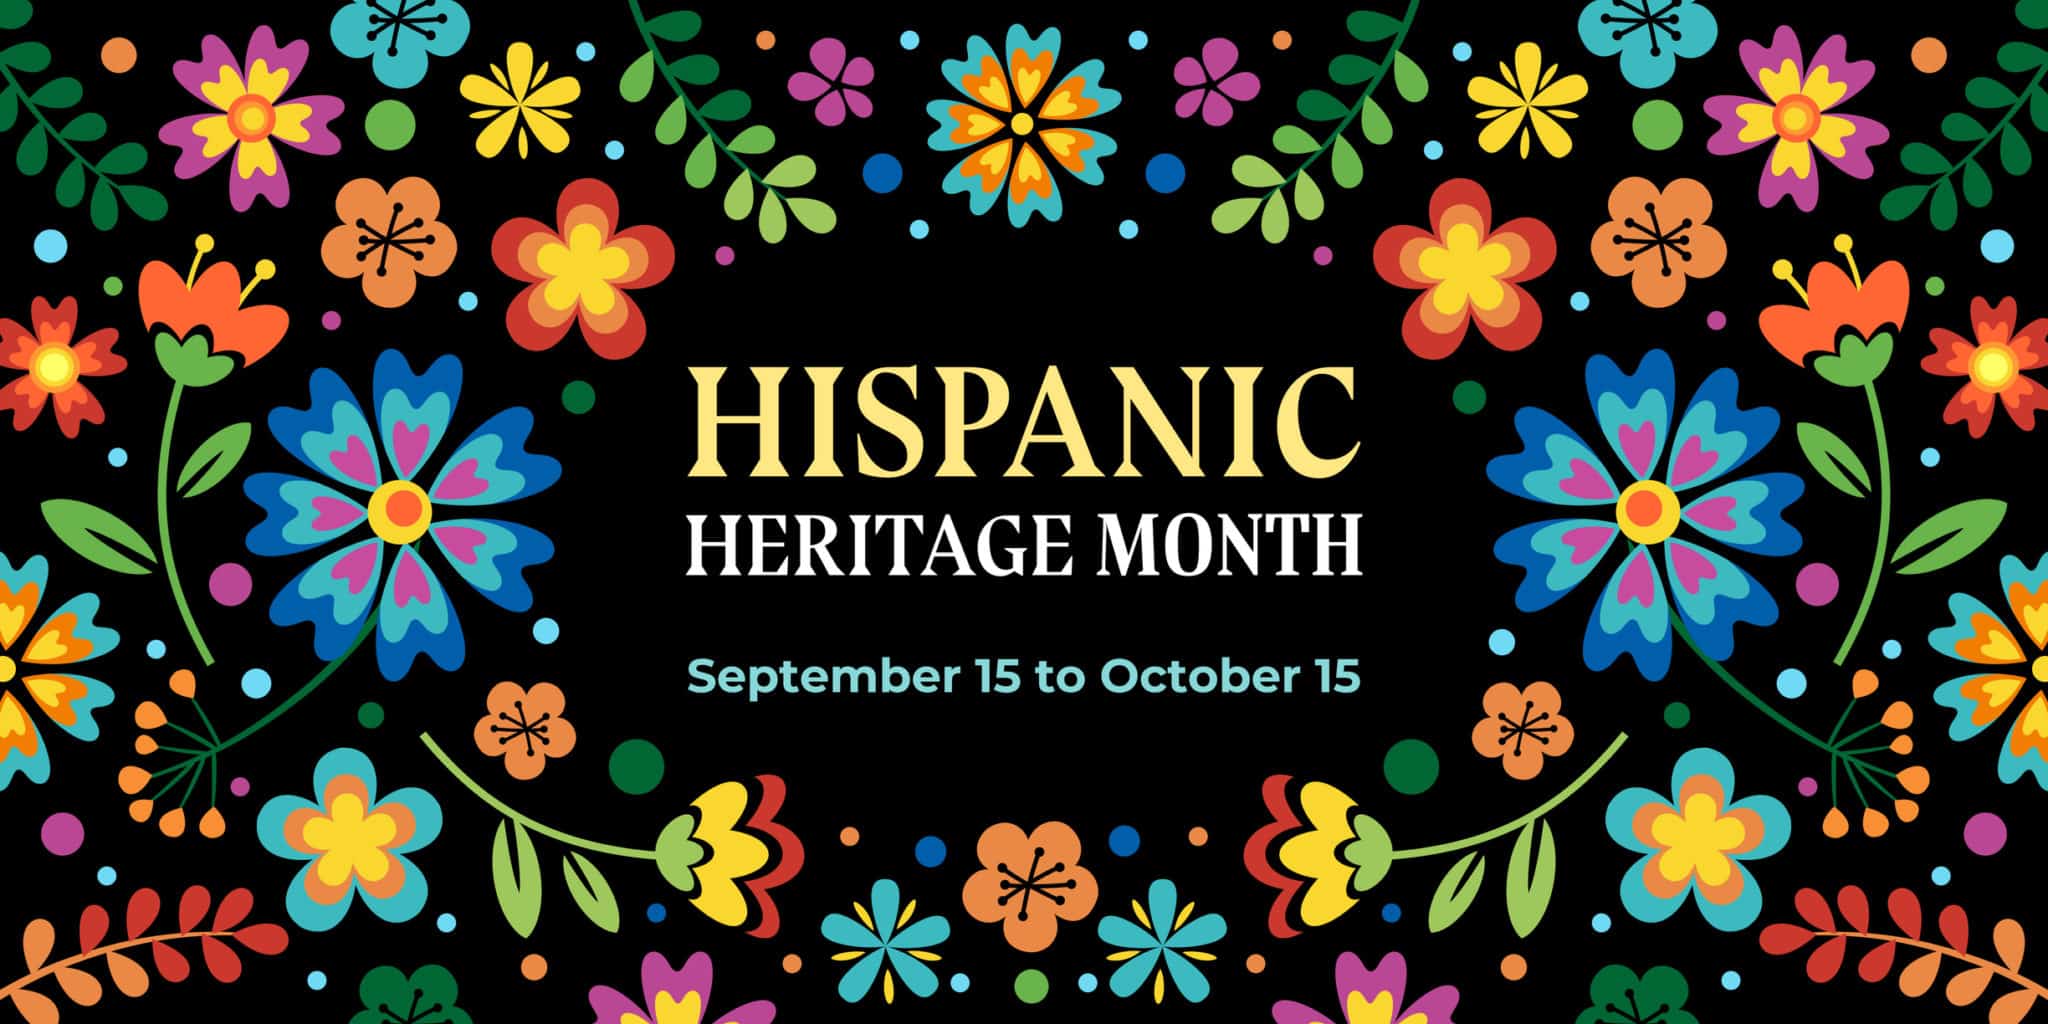 Why I don't celebrate Hispanic Heritage Month